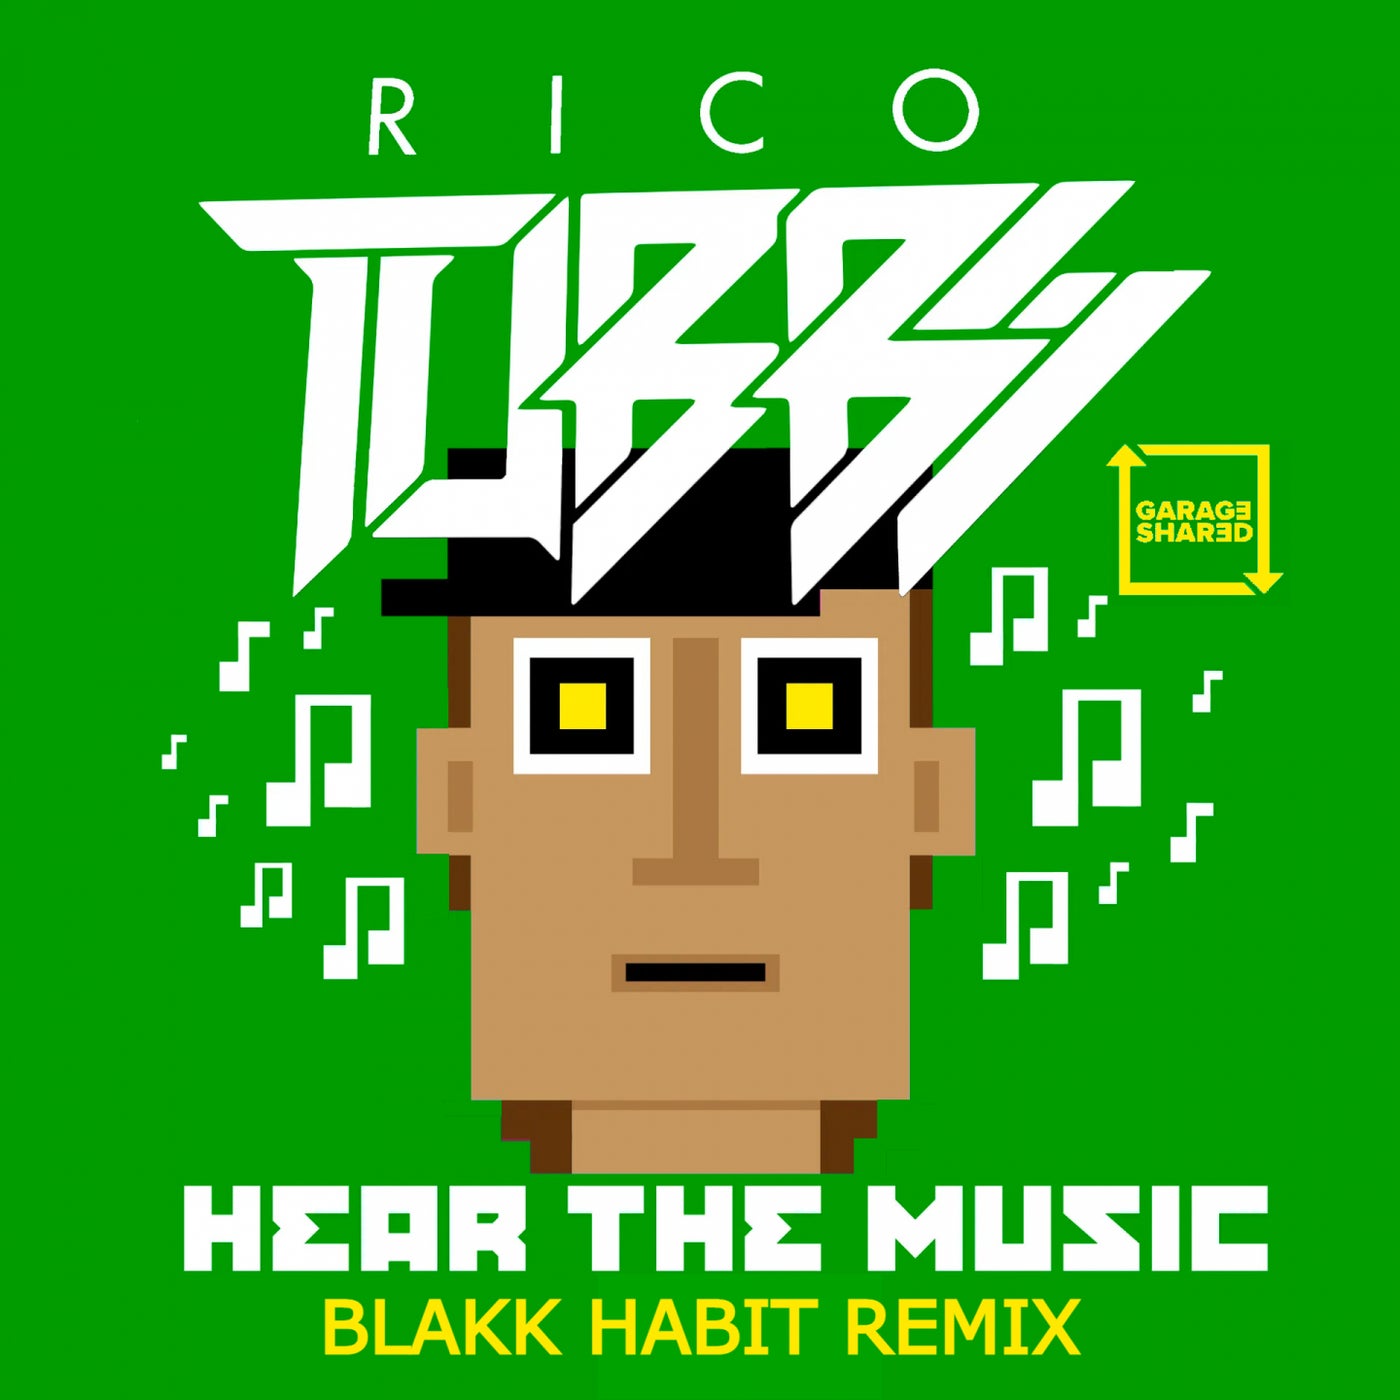 Hear The Music (Blakk Habit Remix)